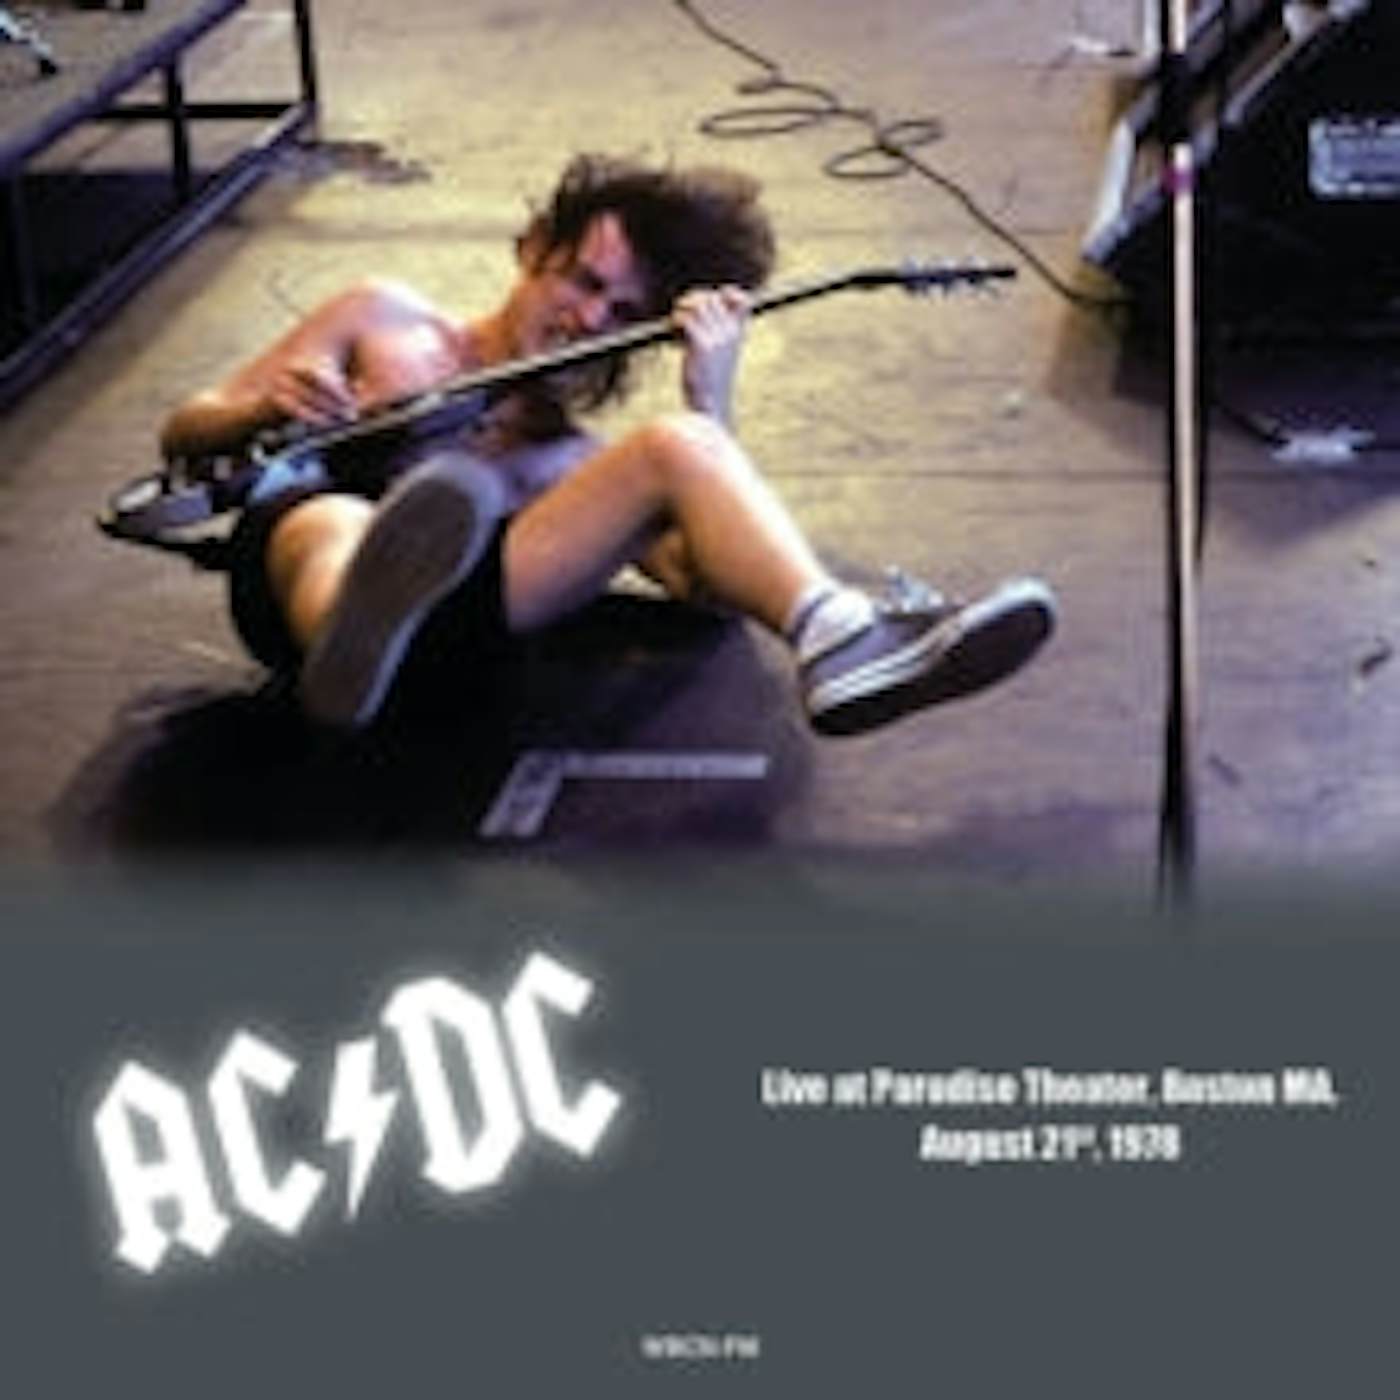 AC/DC LP Vinyl Record - Paradise Theatre Boston August 21st 19 78 (Blue Vinyl)